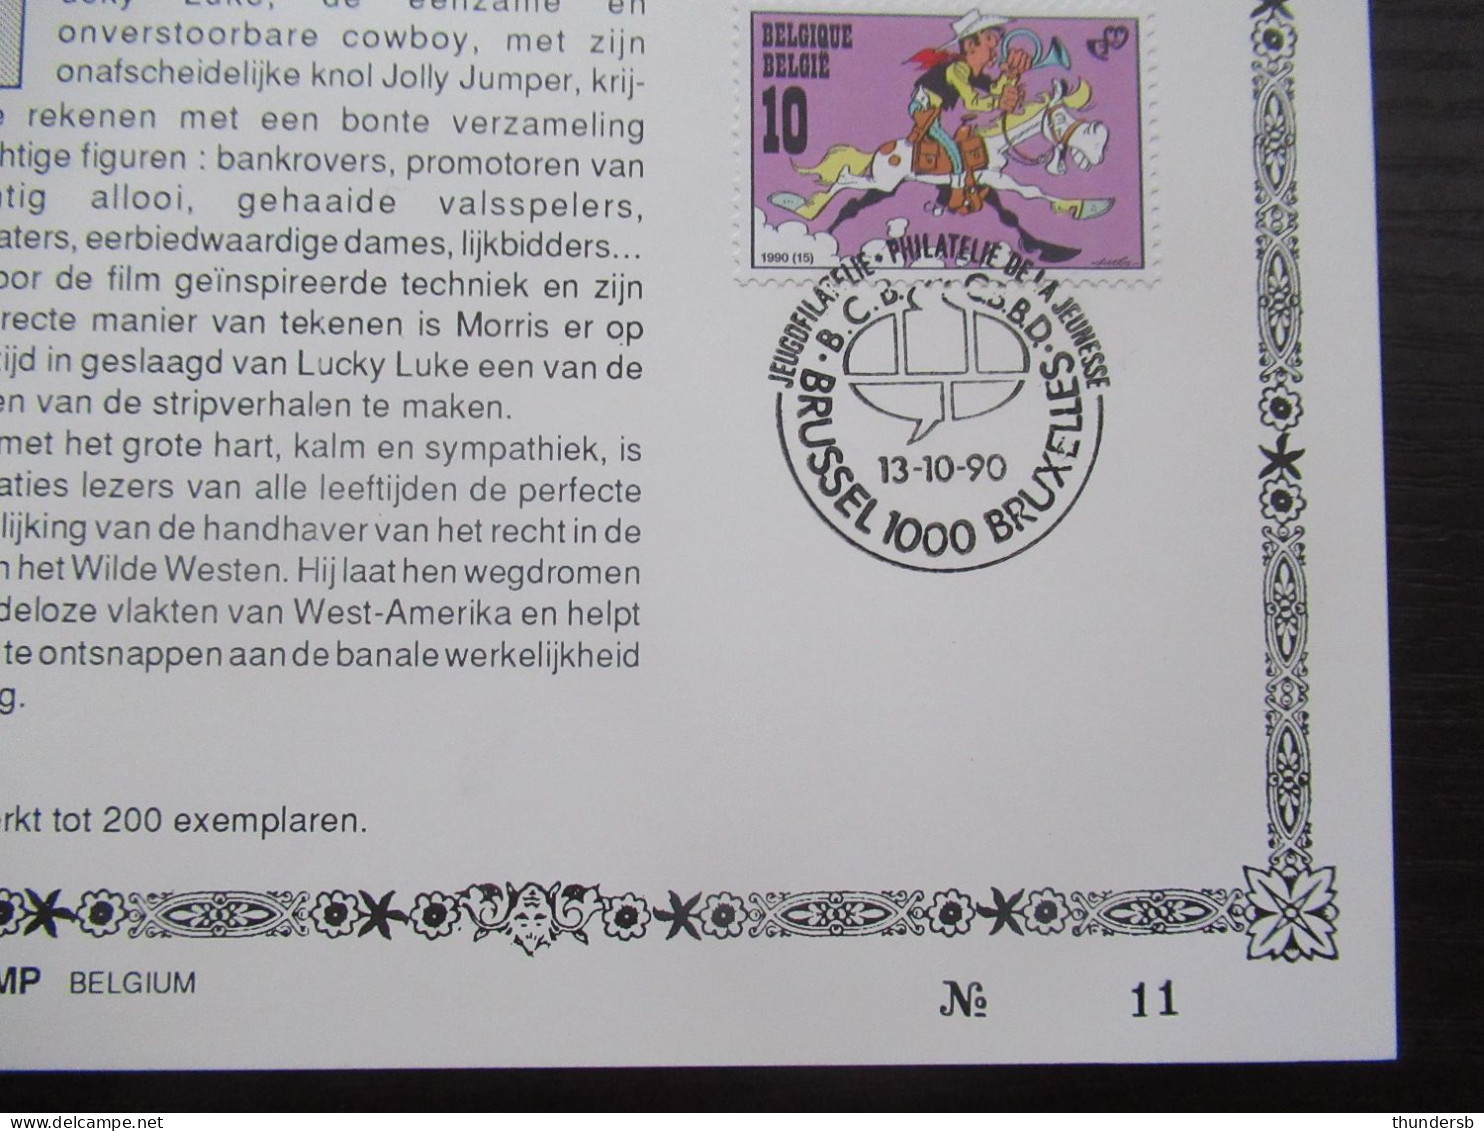 2390 'Jeugdfilatelie: Lucky Luke' - Oplage Beperkt Tot 200 Exemplaren! - Documents Commémoratifs